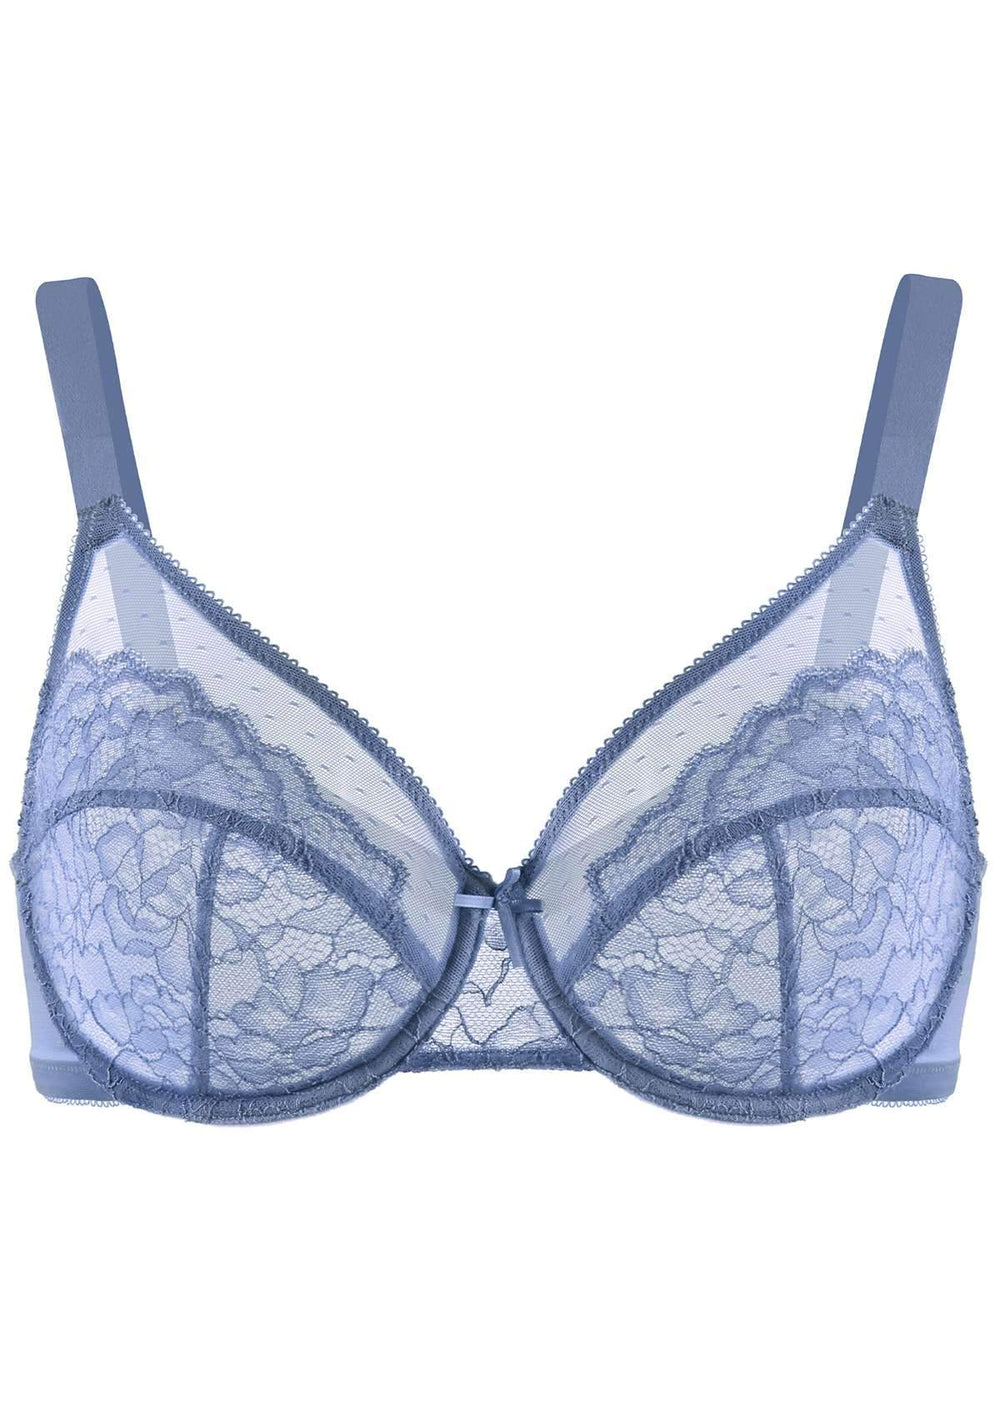 New Look lace underwire bra in light blue